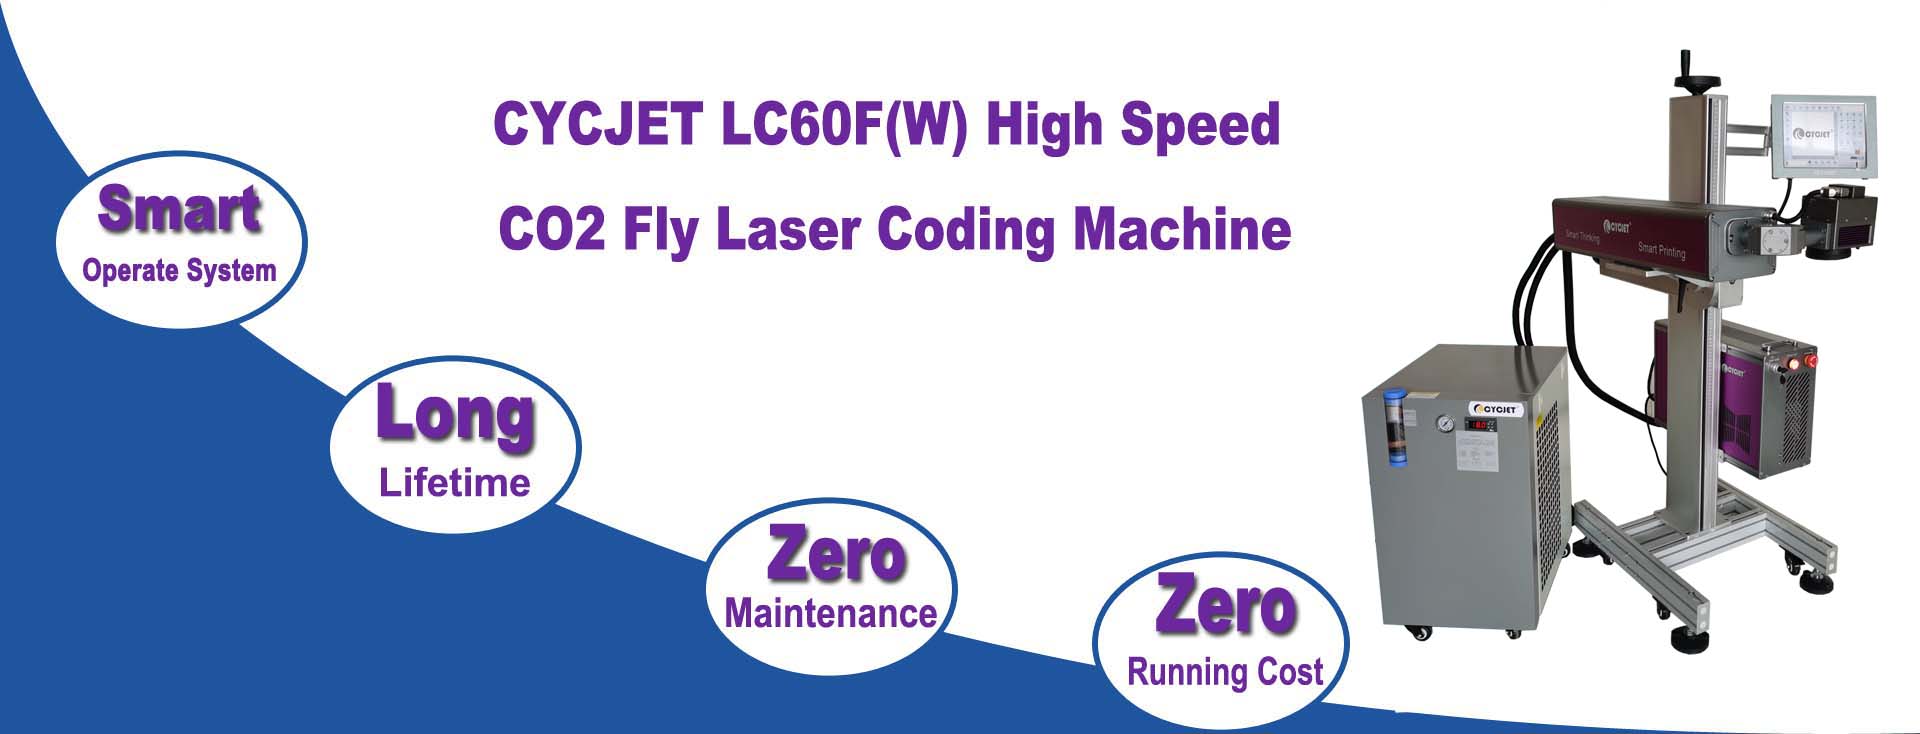 LC60F(W) Fly Laser Coding Machine.jpg